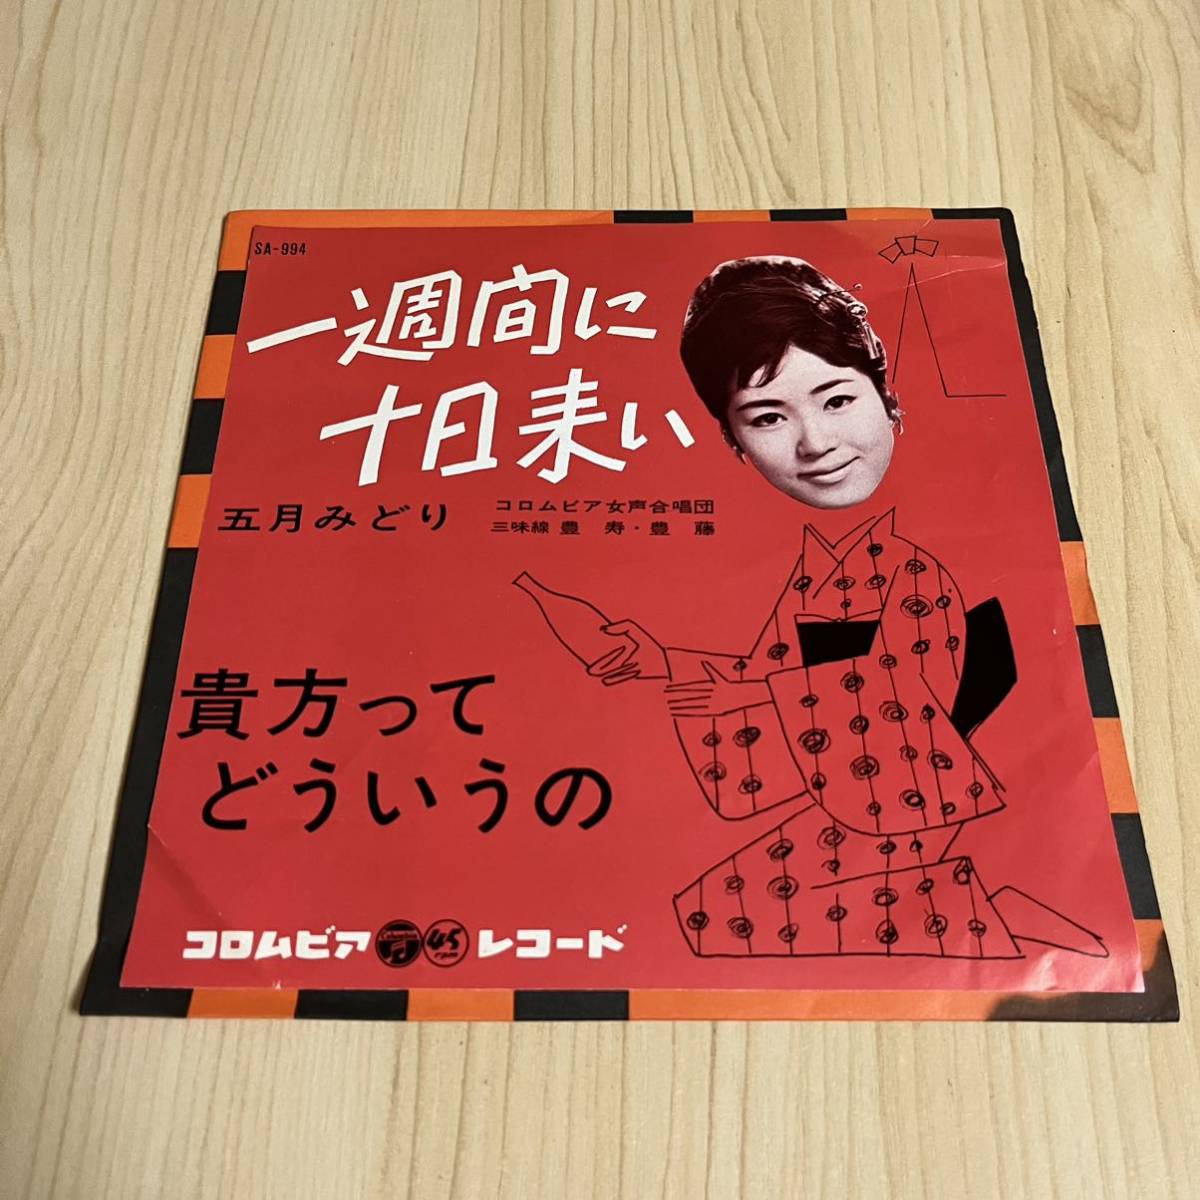 【7inch】五月みどり 一週間に十日来い 貴方ってどういうの MIDORI SATSUKI / EP レコード / SA-994 / 和モノ 昭和歌謡/_画像1